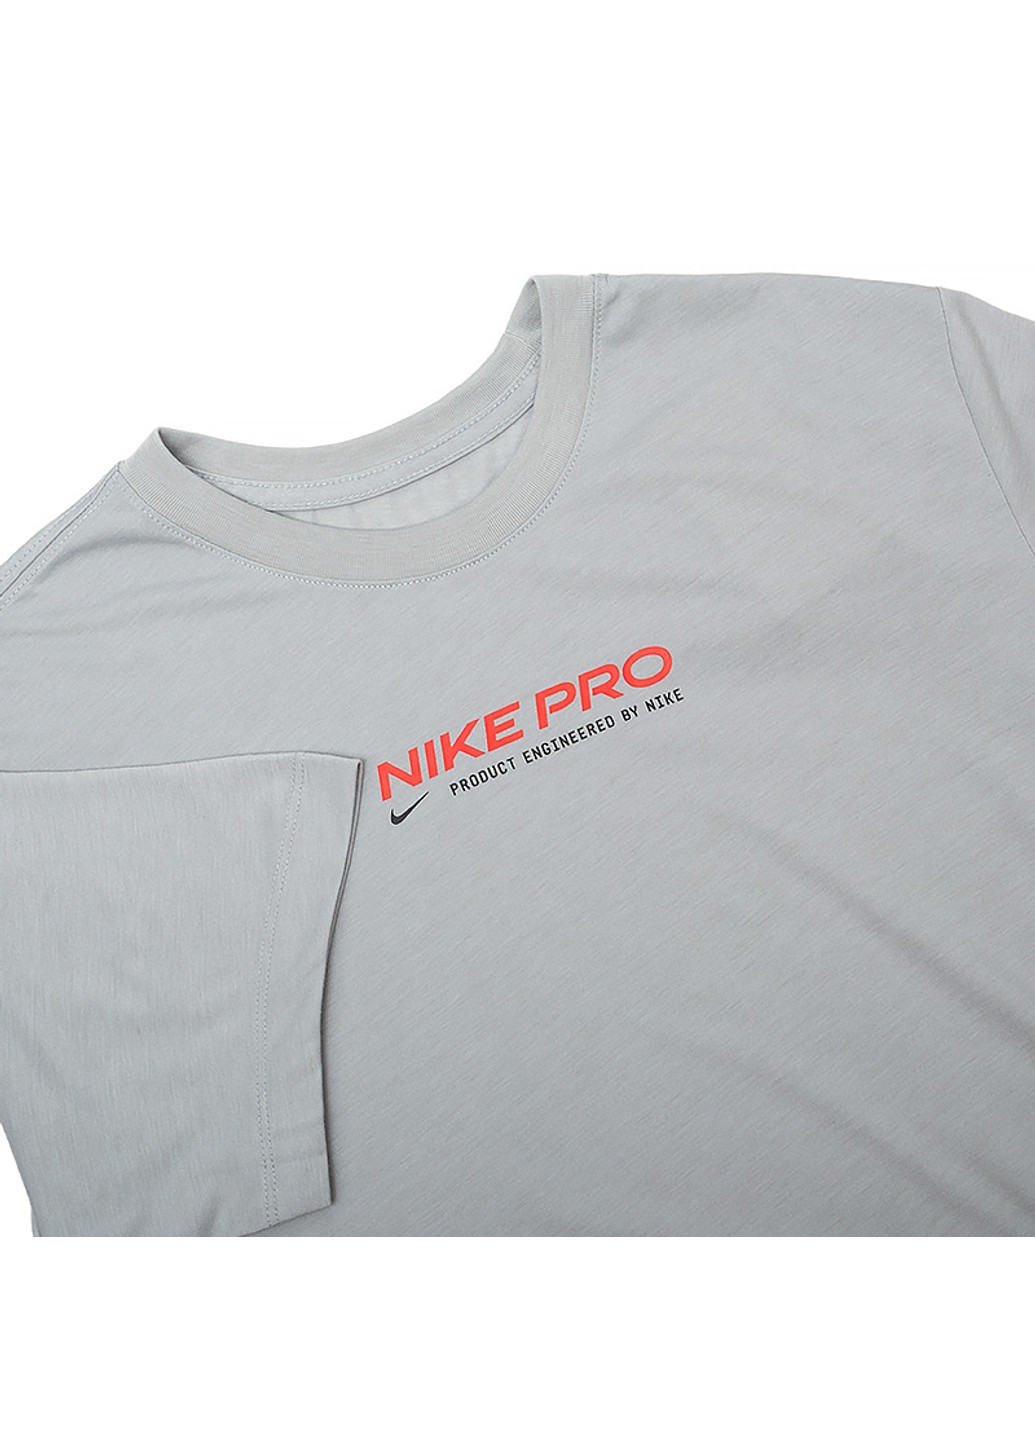 Белая футболка m nk df tee db nk pro 2 Nike